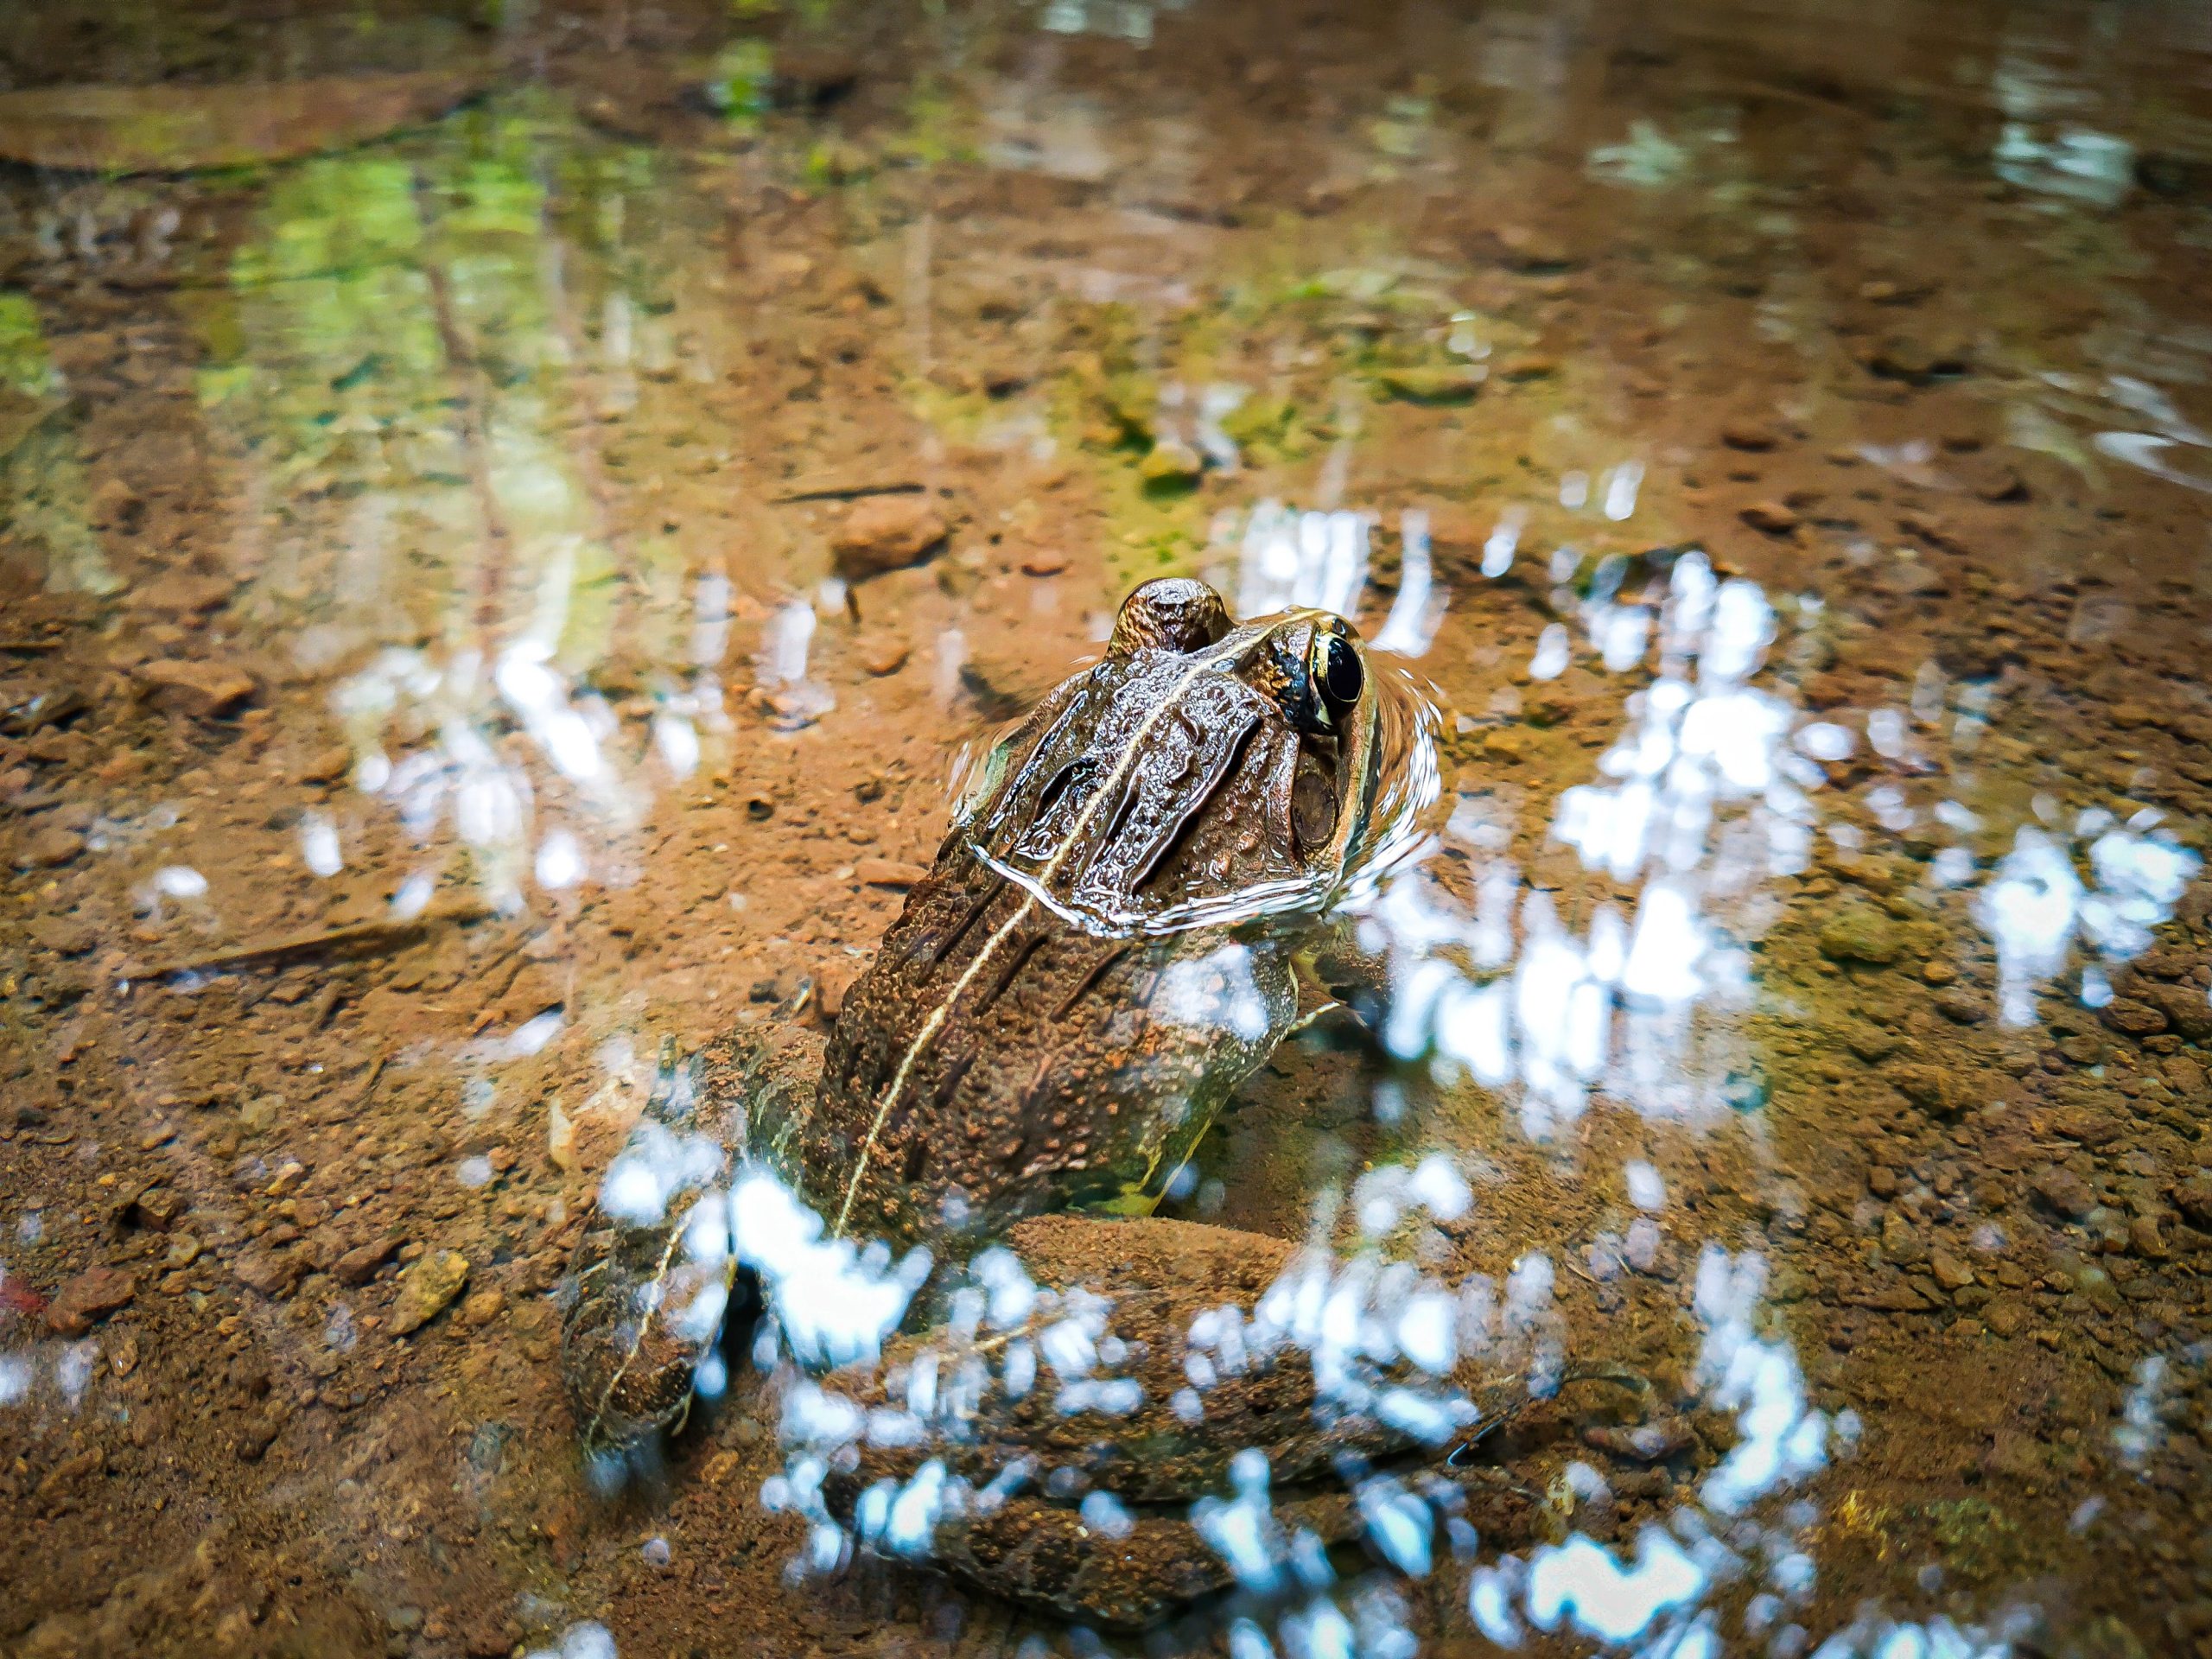 A frog sitting still in a pond